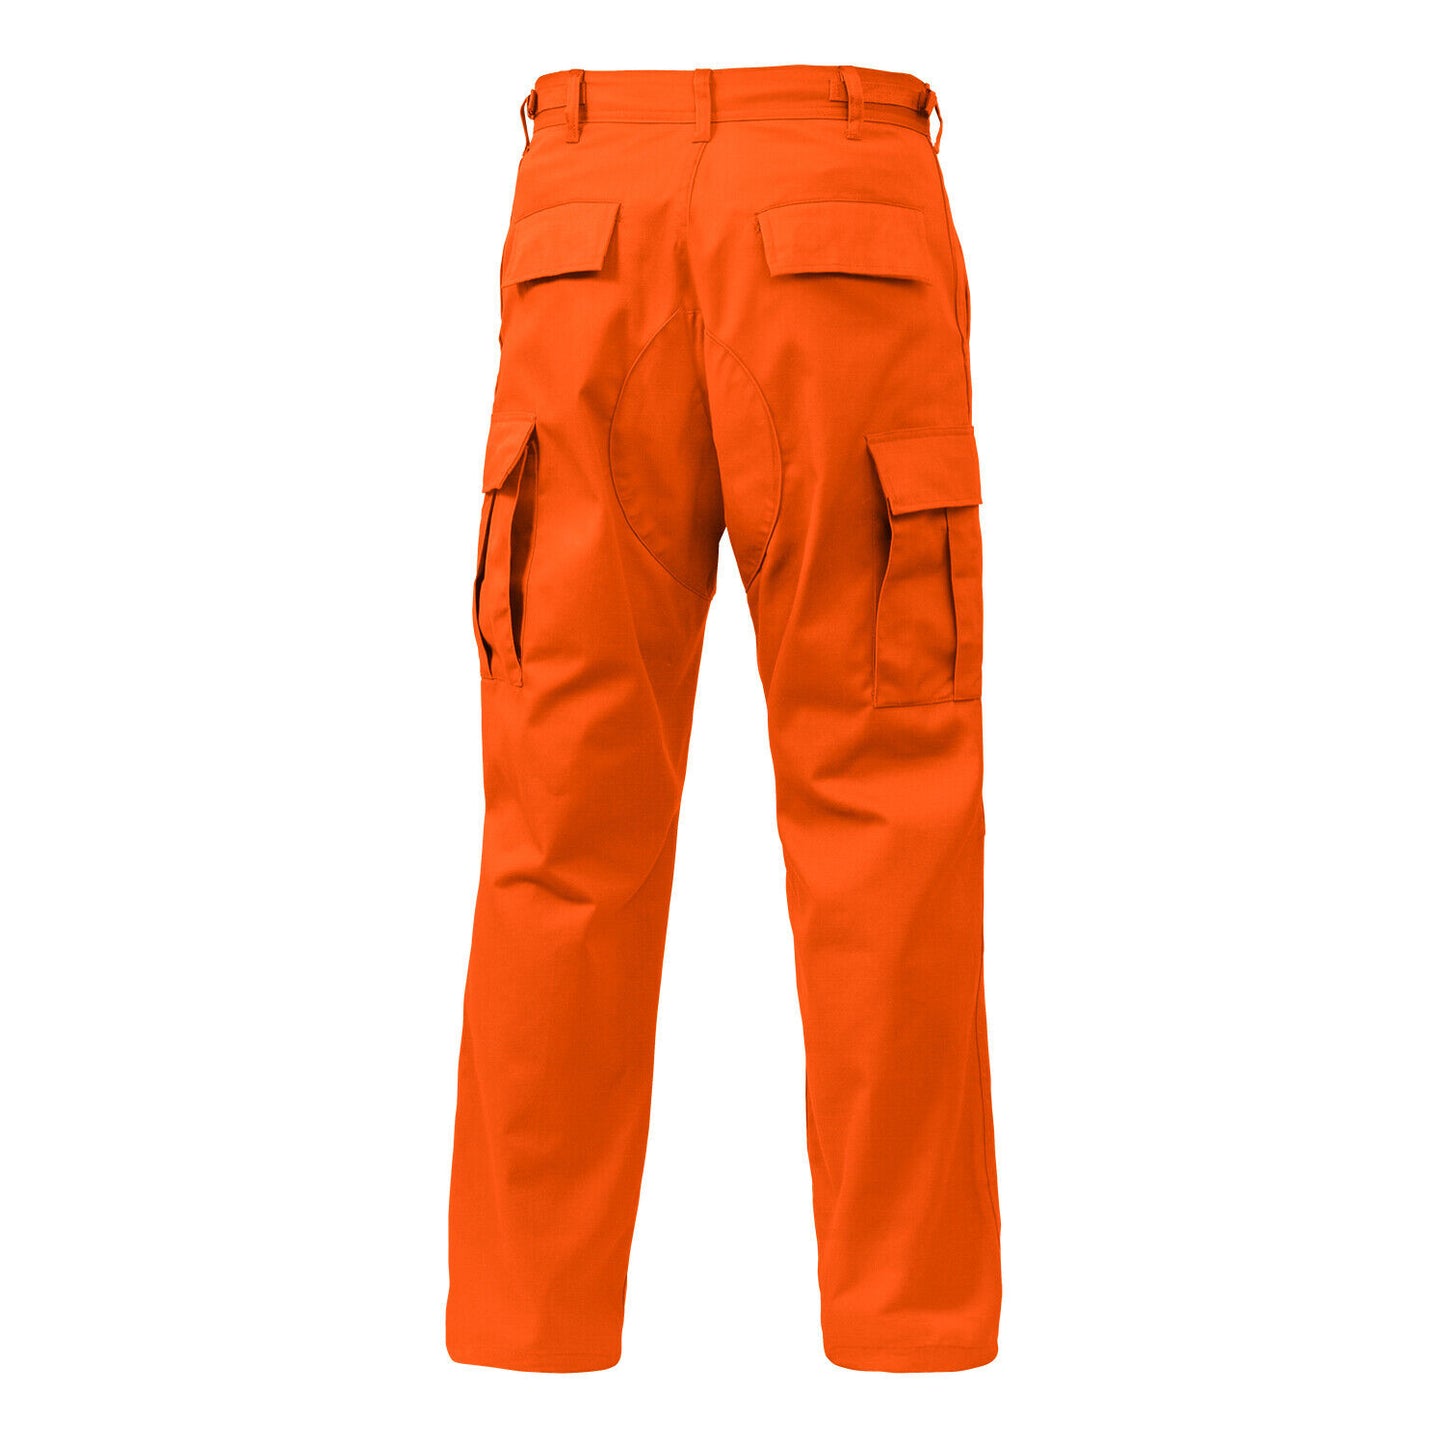 Blaze Orange 6 Pocket Tactical BDU Pant